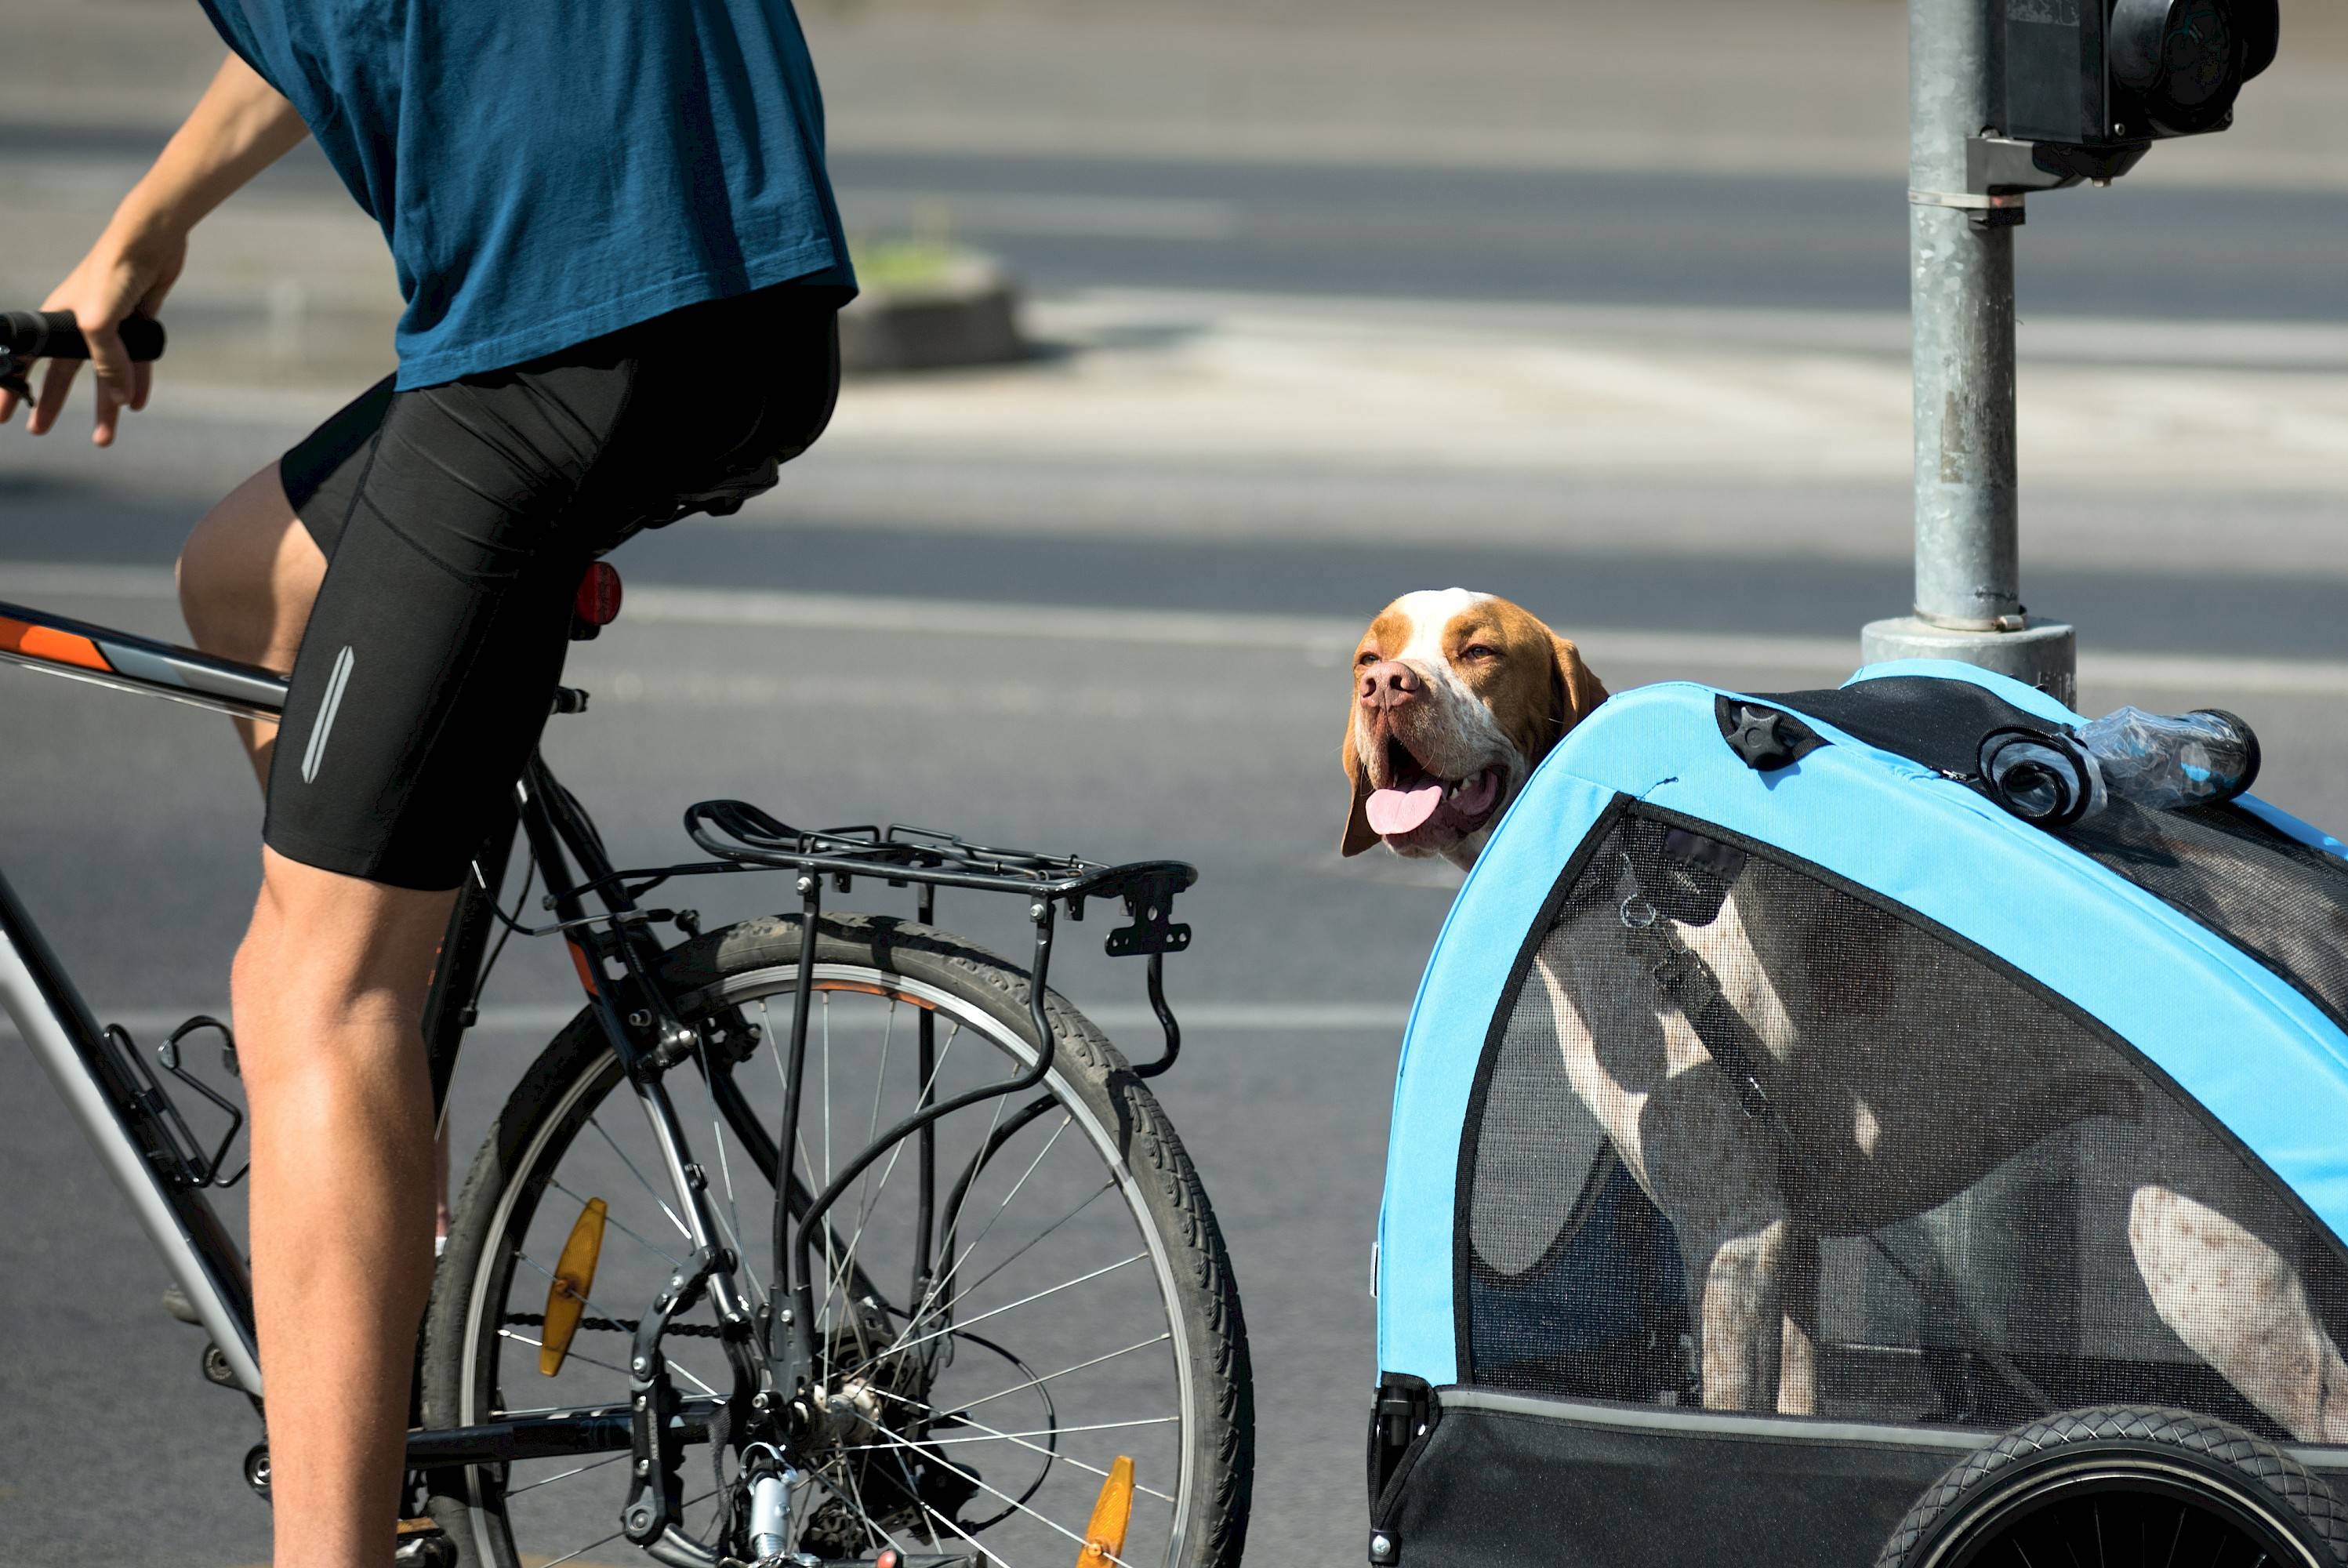 man op fiets trekt fietskar met hond in